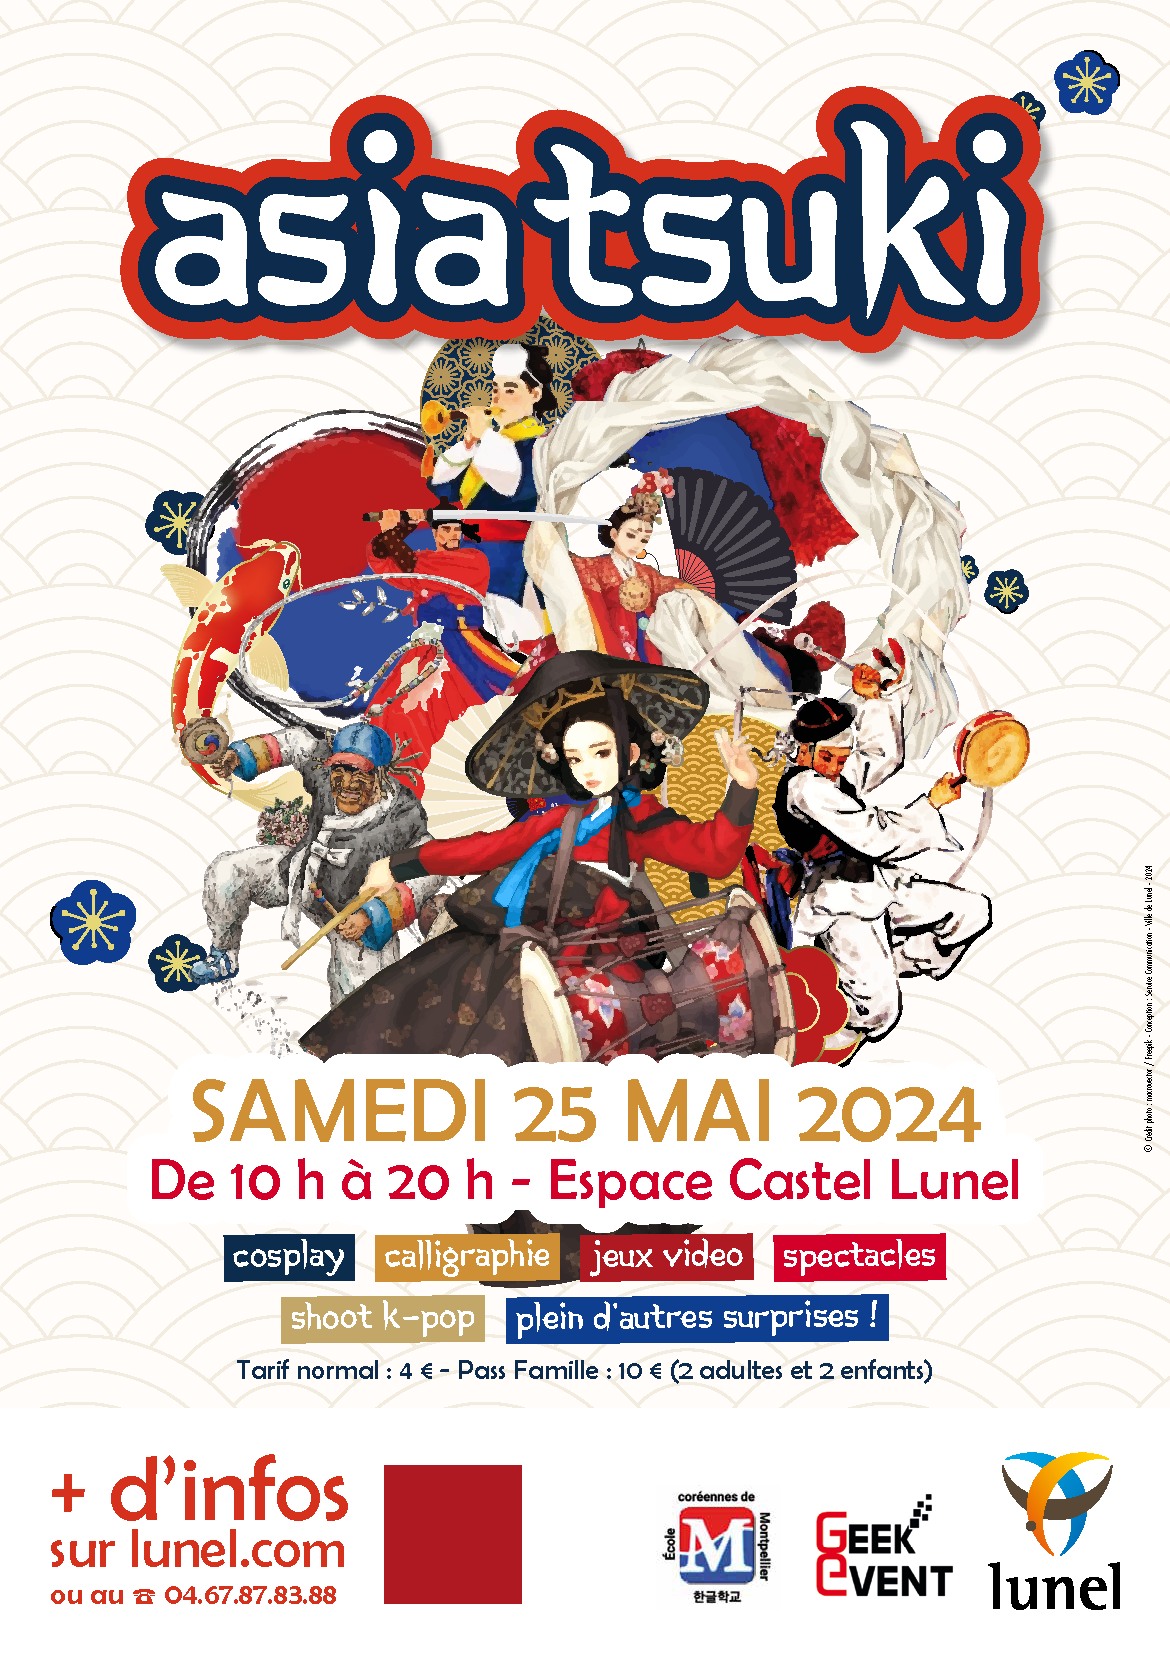 On se retrouve ce samedi 25 mai 2024  Lunel pour l'Asia Tsuki !